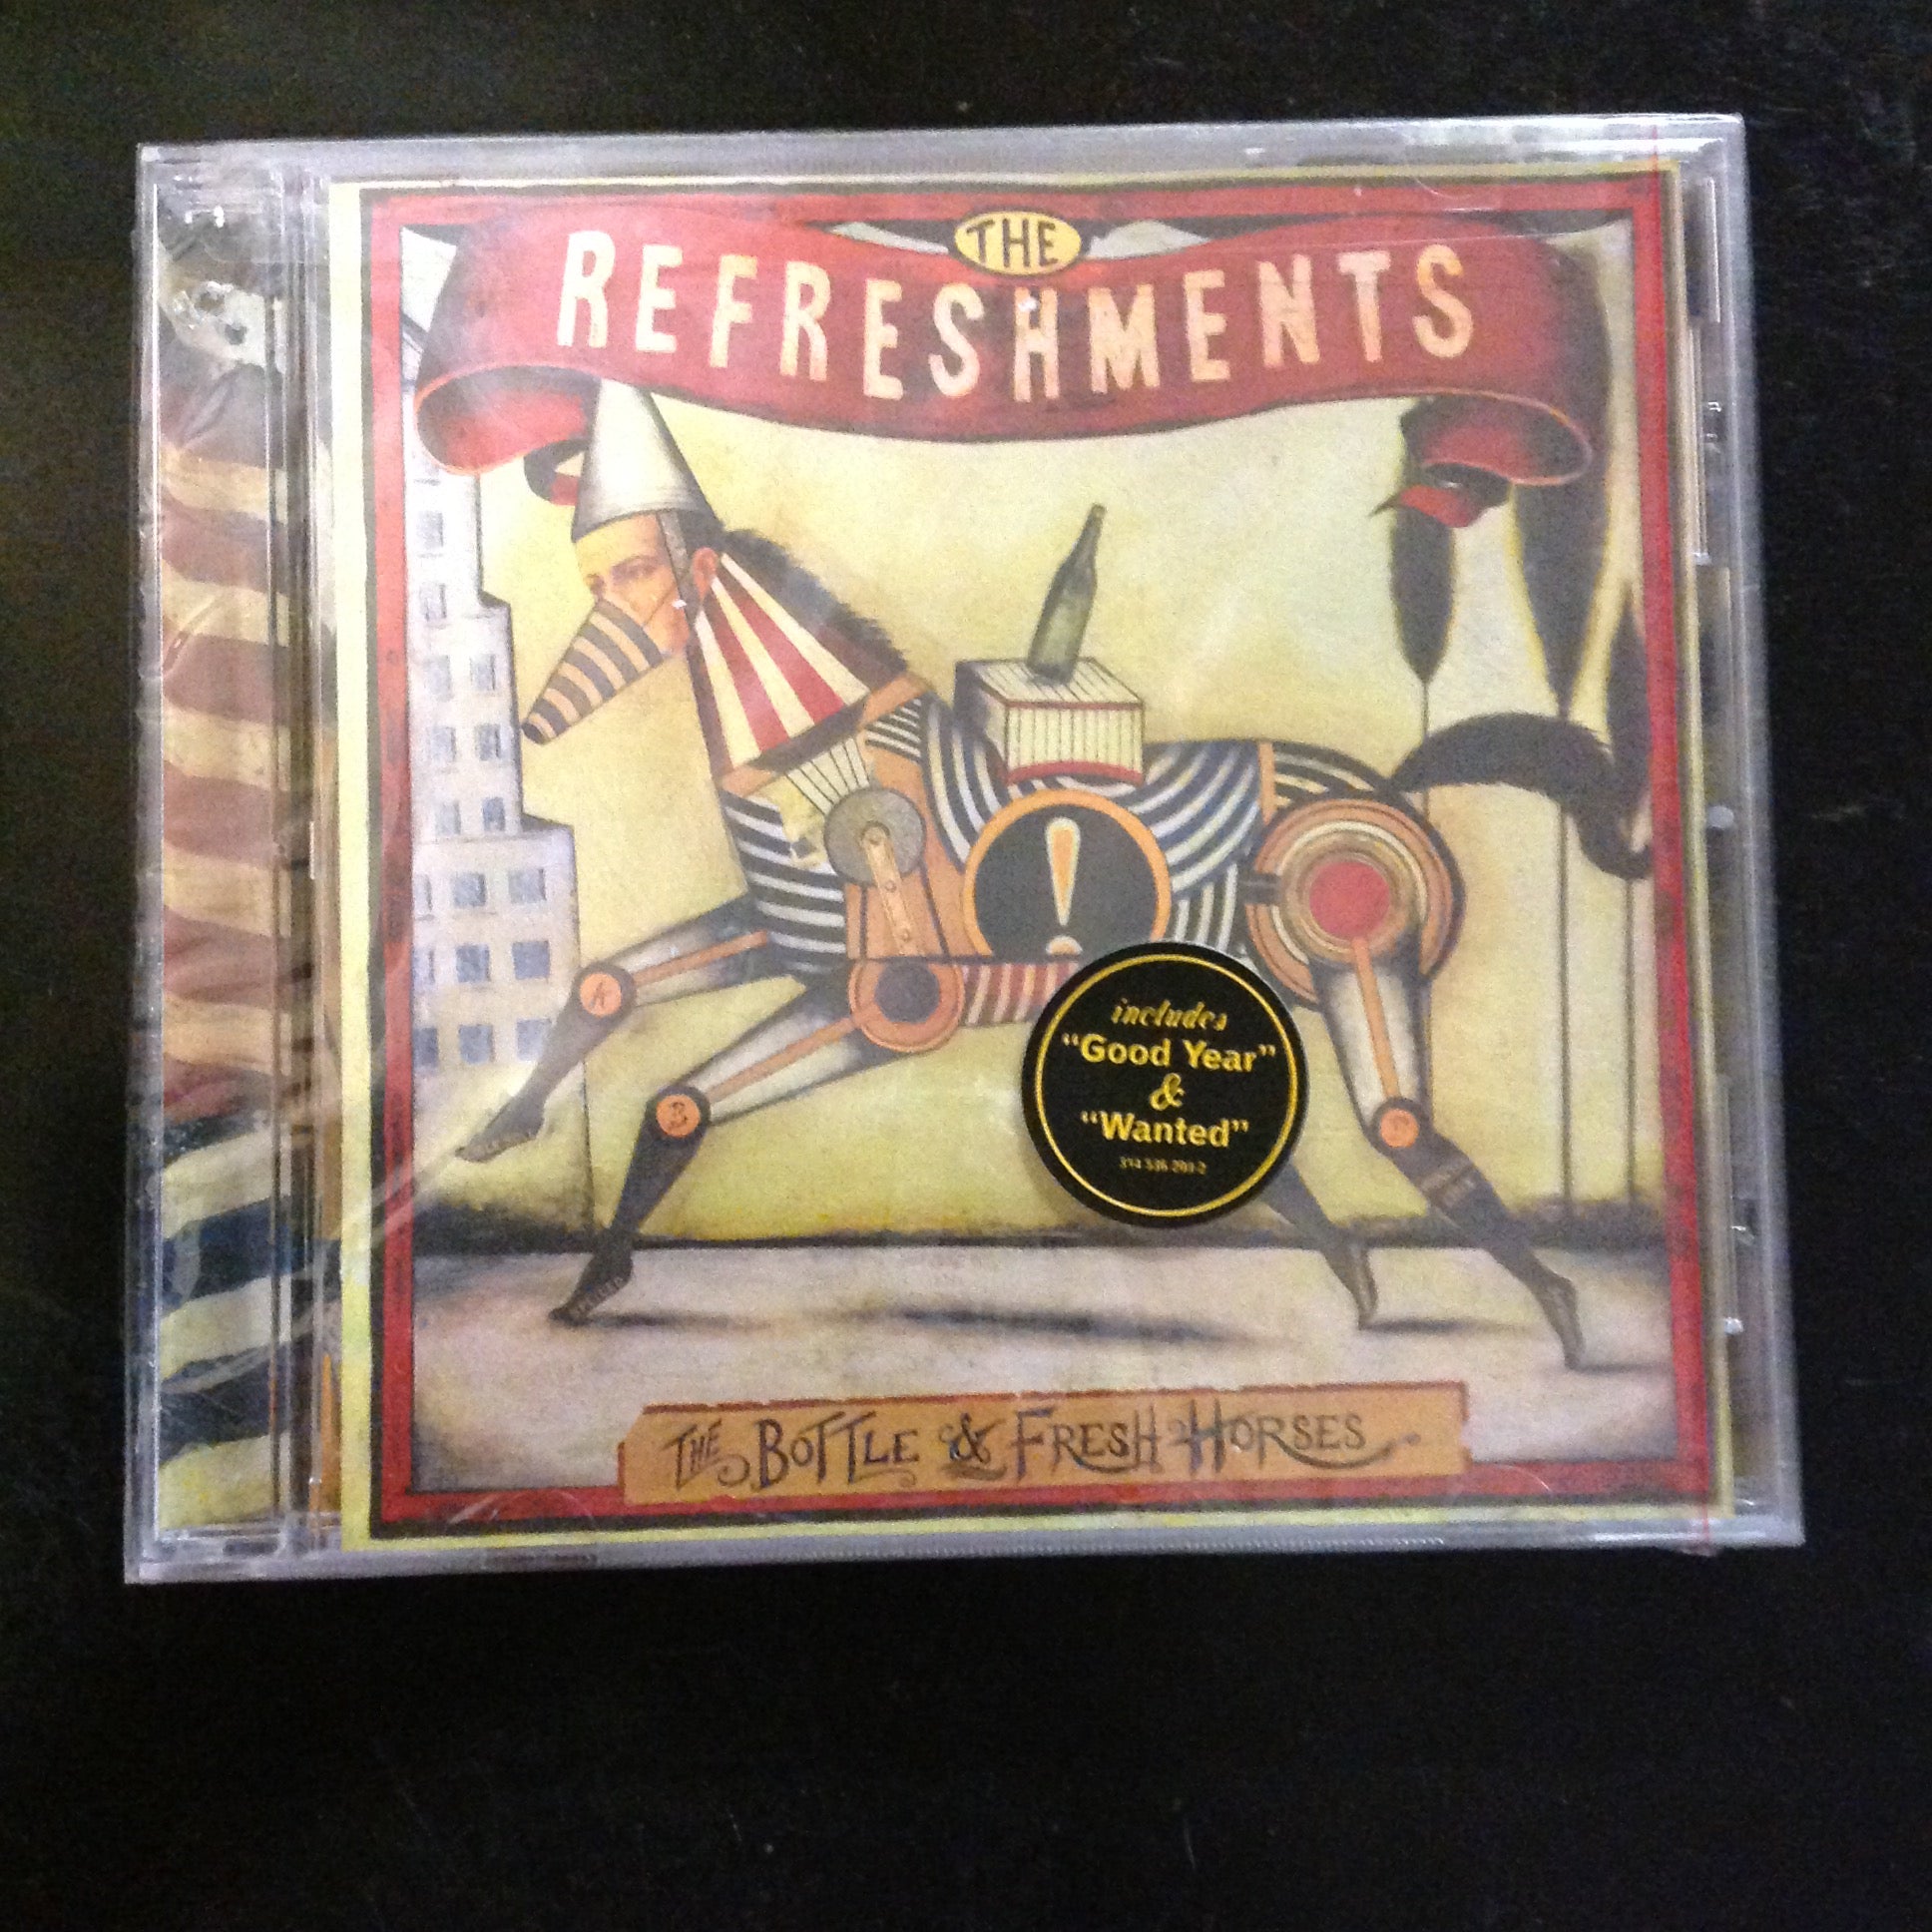 CD SEALED The Refreshments The Bottle & Fresh Horses 314536203-2 HTF NEW